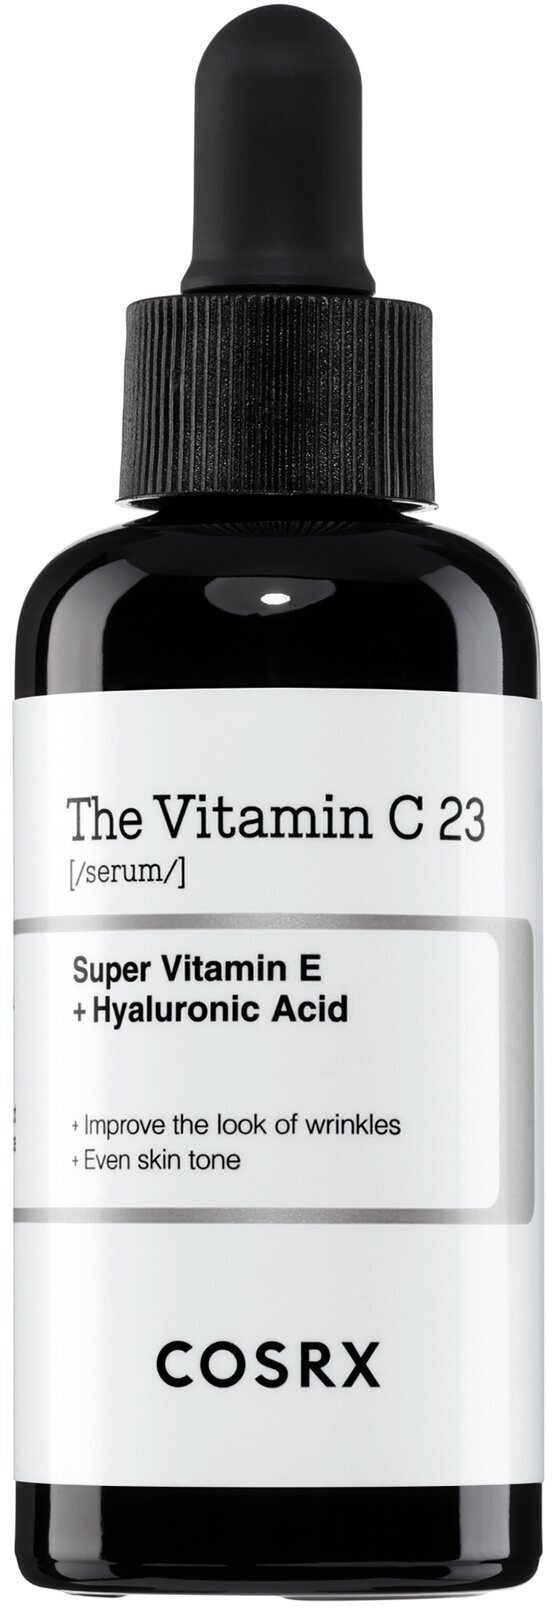 COSRX Сыворотка для лица с витамином С 23% The Vitamin C 23 Serum, 20 г